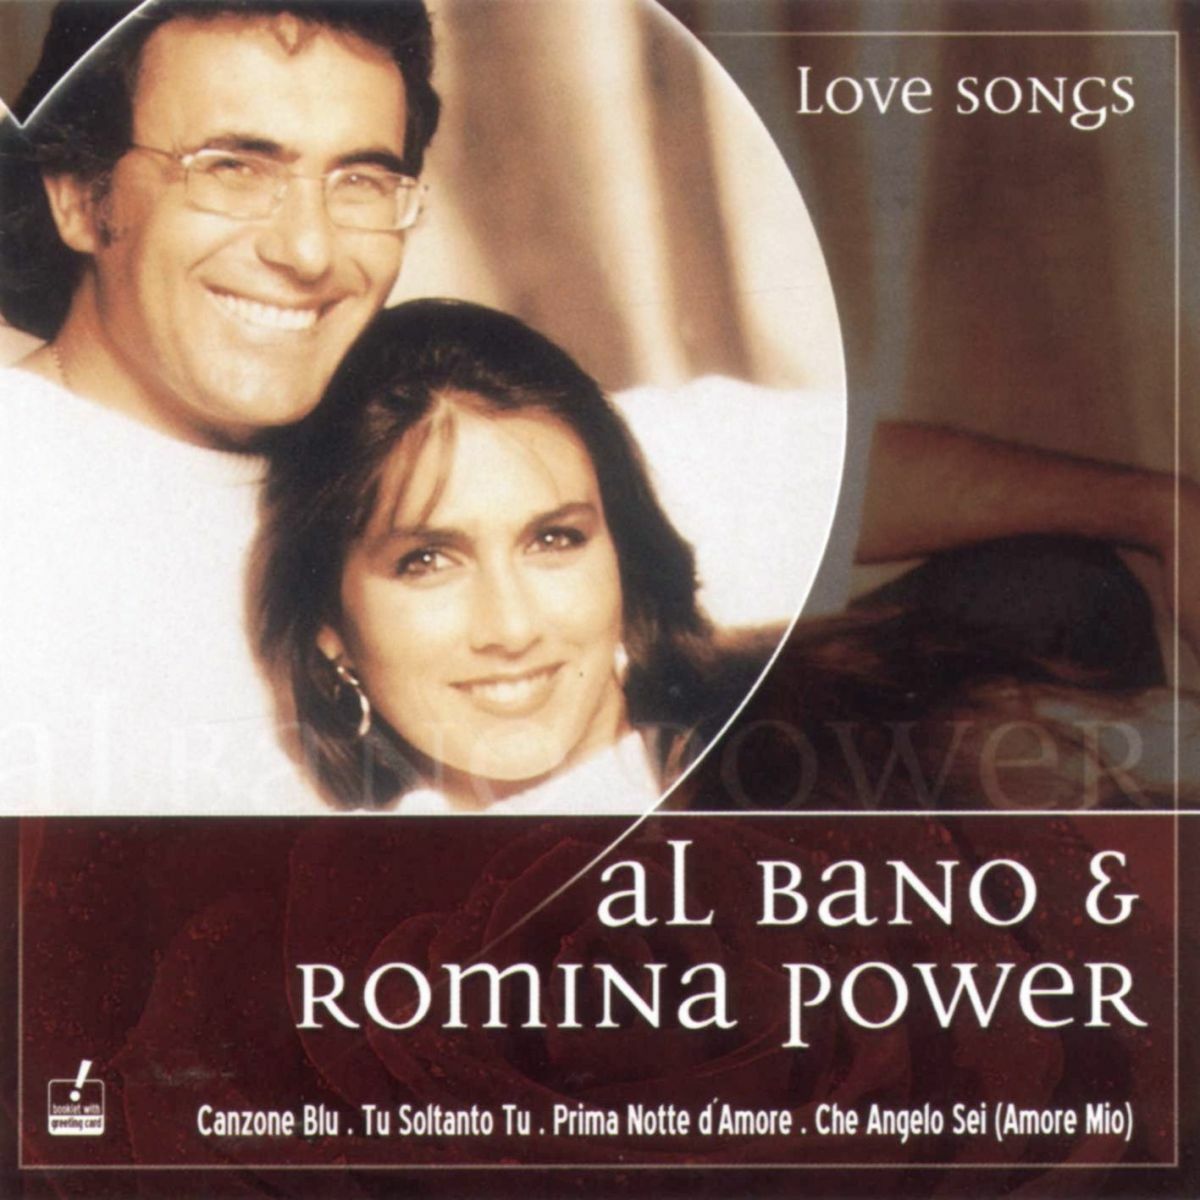 Al Bano u0026 Romina Power: albums